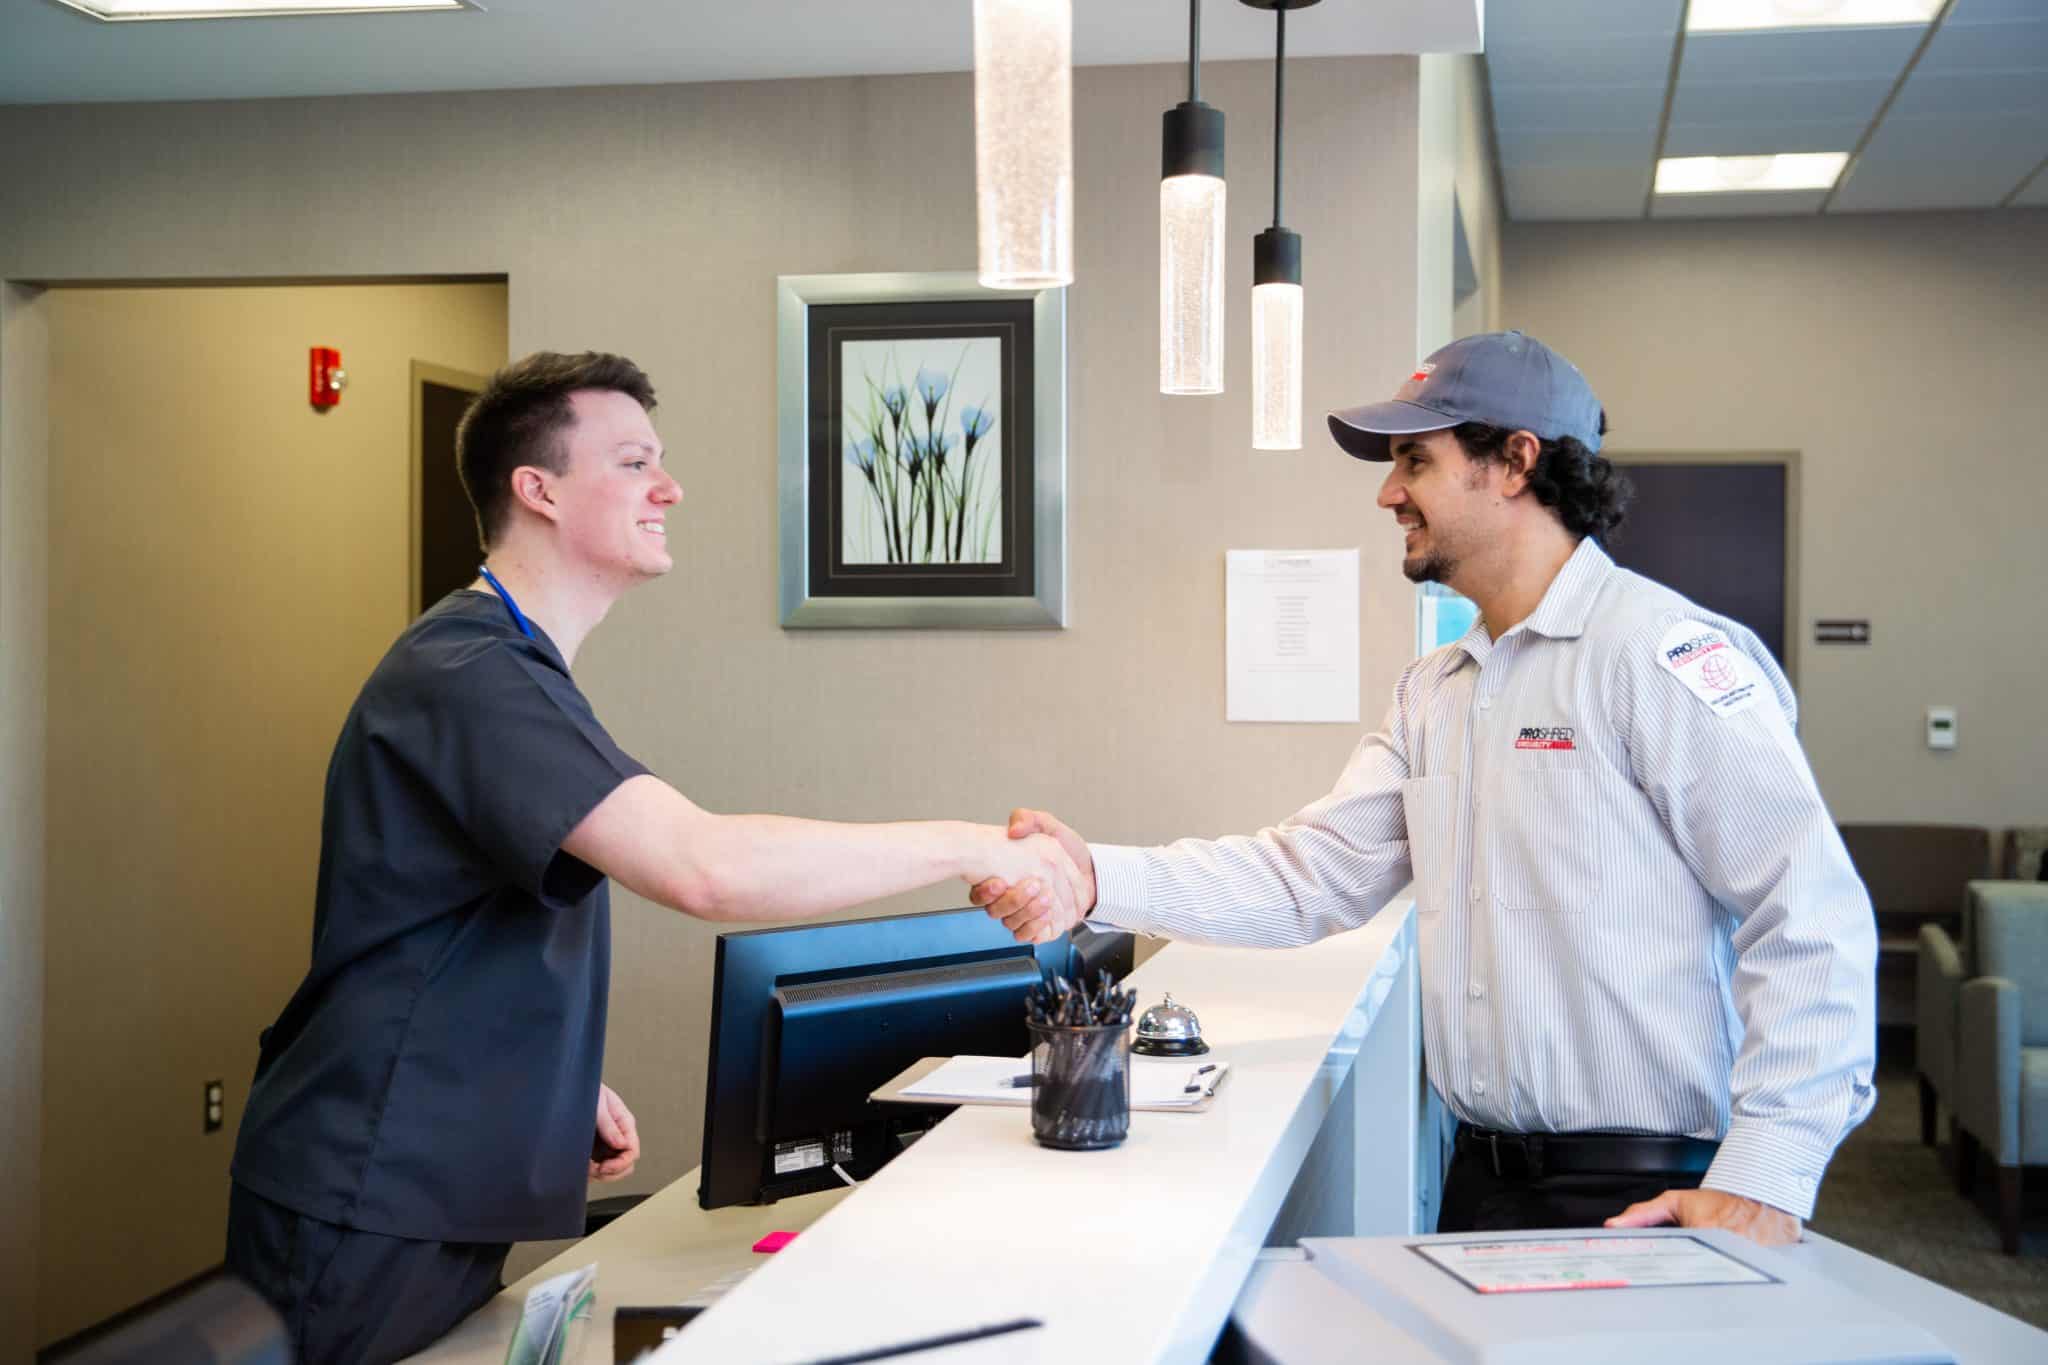 Shredding company employee and male nurse shaking hands.